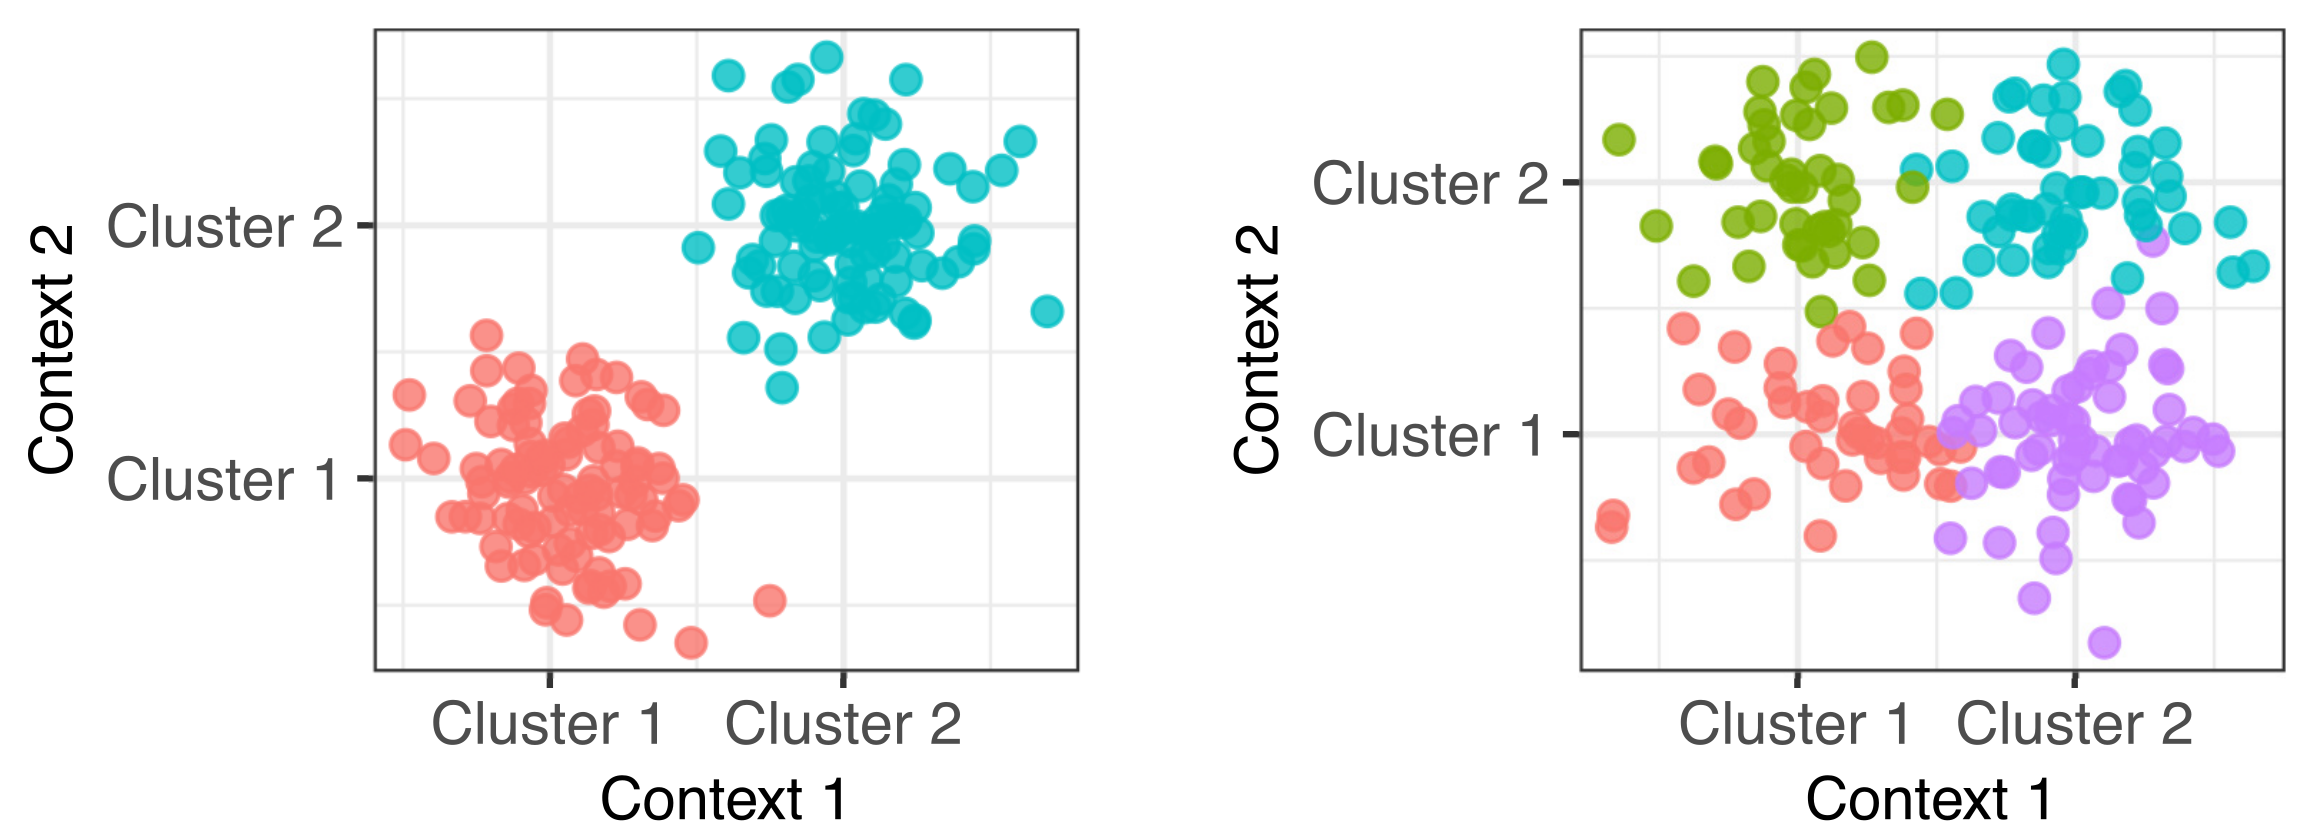 Clusternomics example